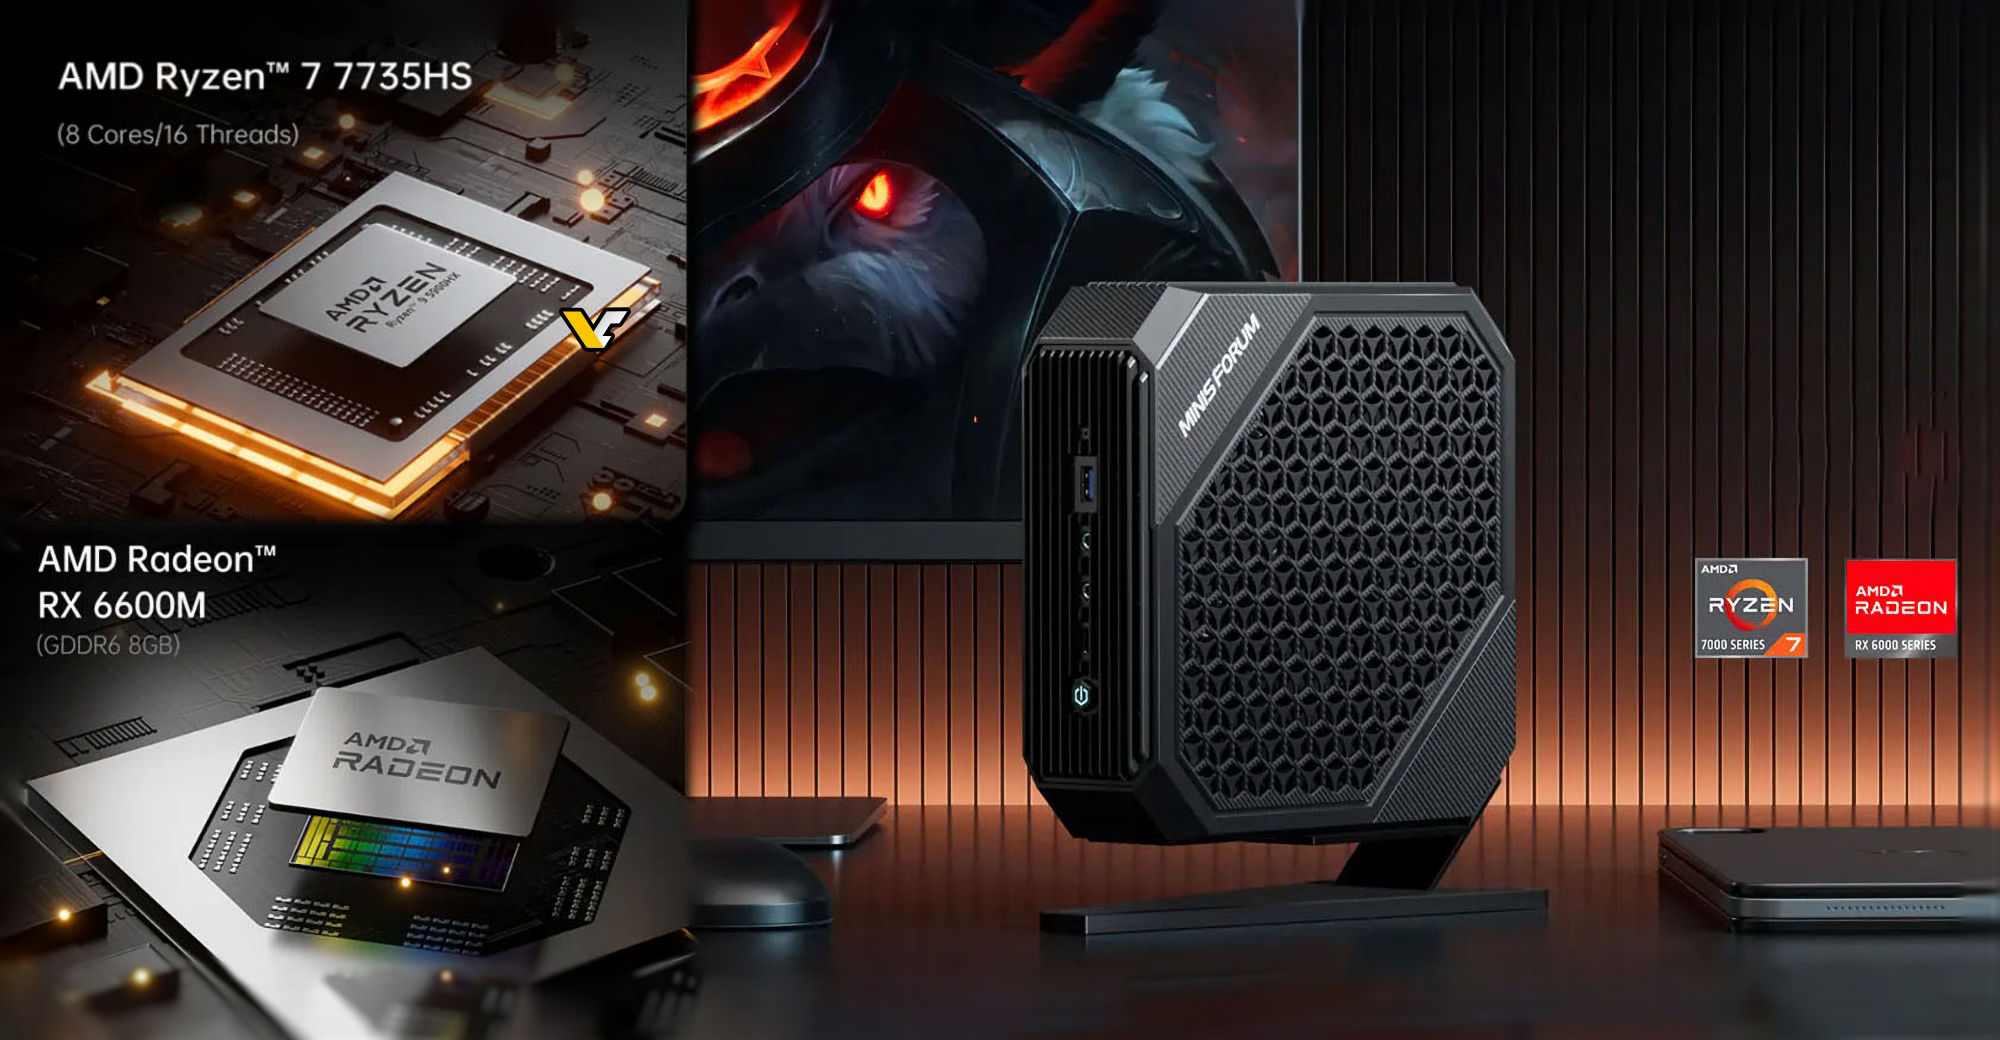 Minisforum HX77G is a new gaming Mini-PC with Radeon RX 6600M GPU and Ryzen  7 7735H CPU, costs $639 